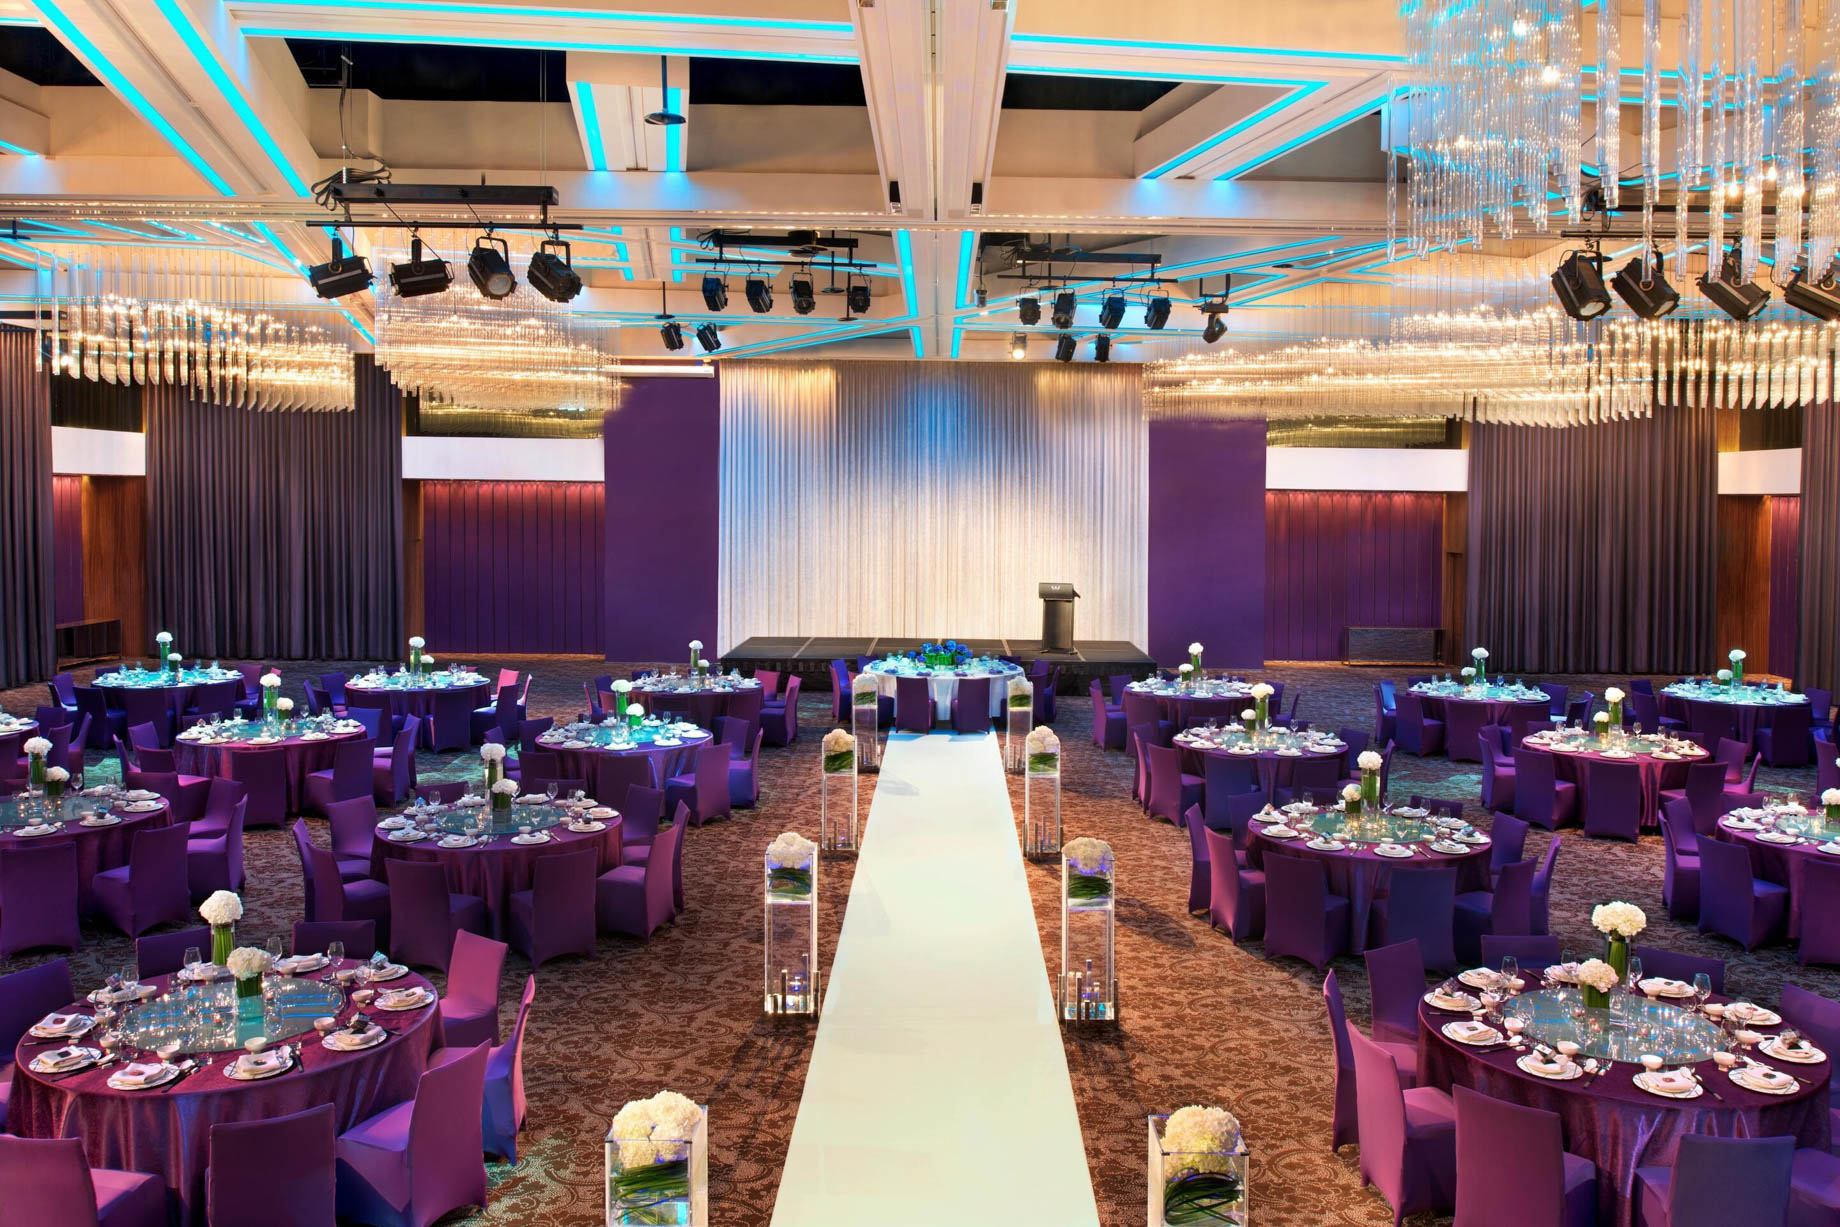 W Taipei Hotel – Taipei, Taiwan – Mega Meeting Room Wedding Reception